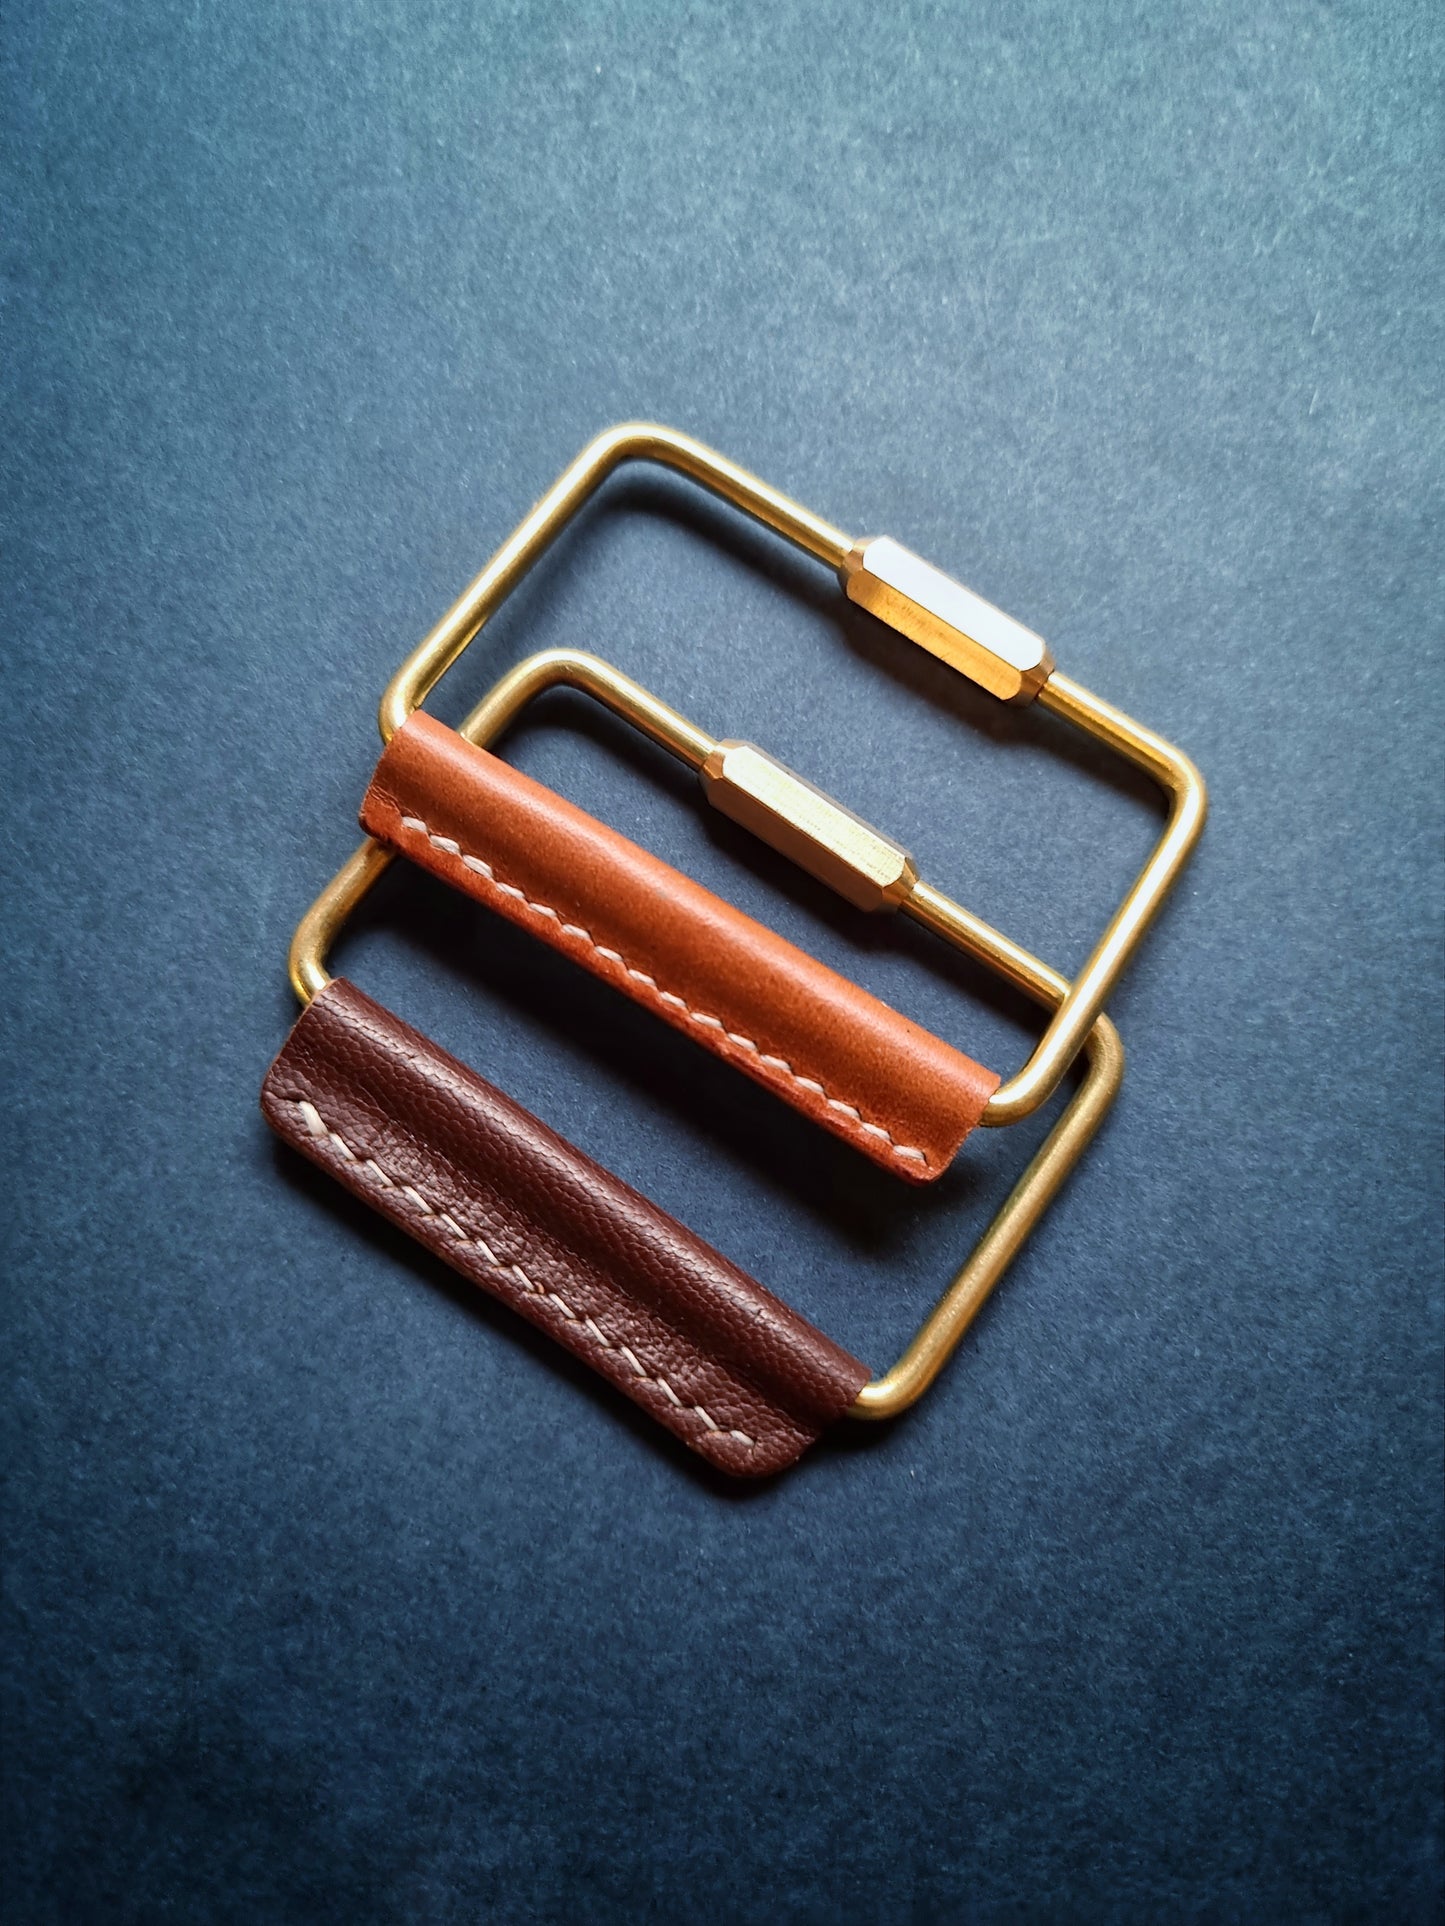 Leather&Brass - key holders